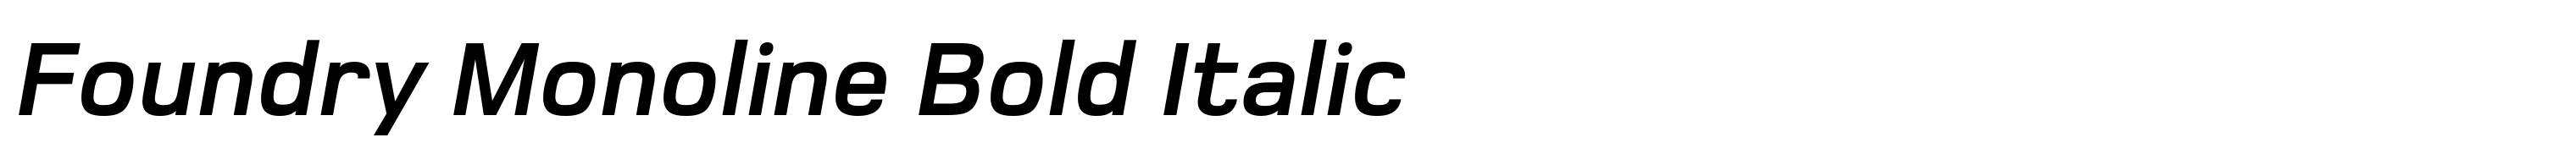 Foundry Monoline Bold Italic